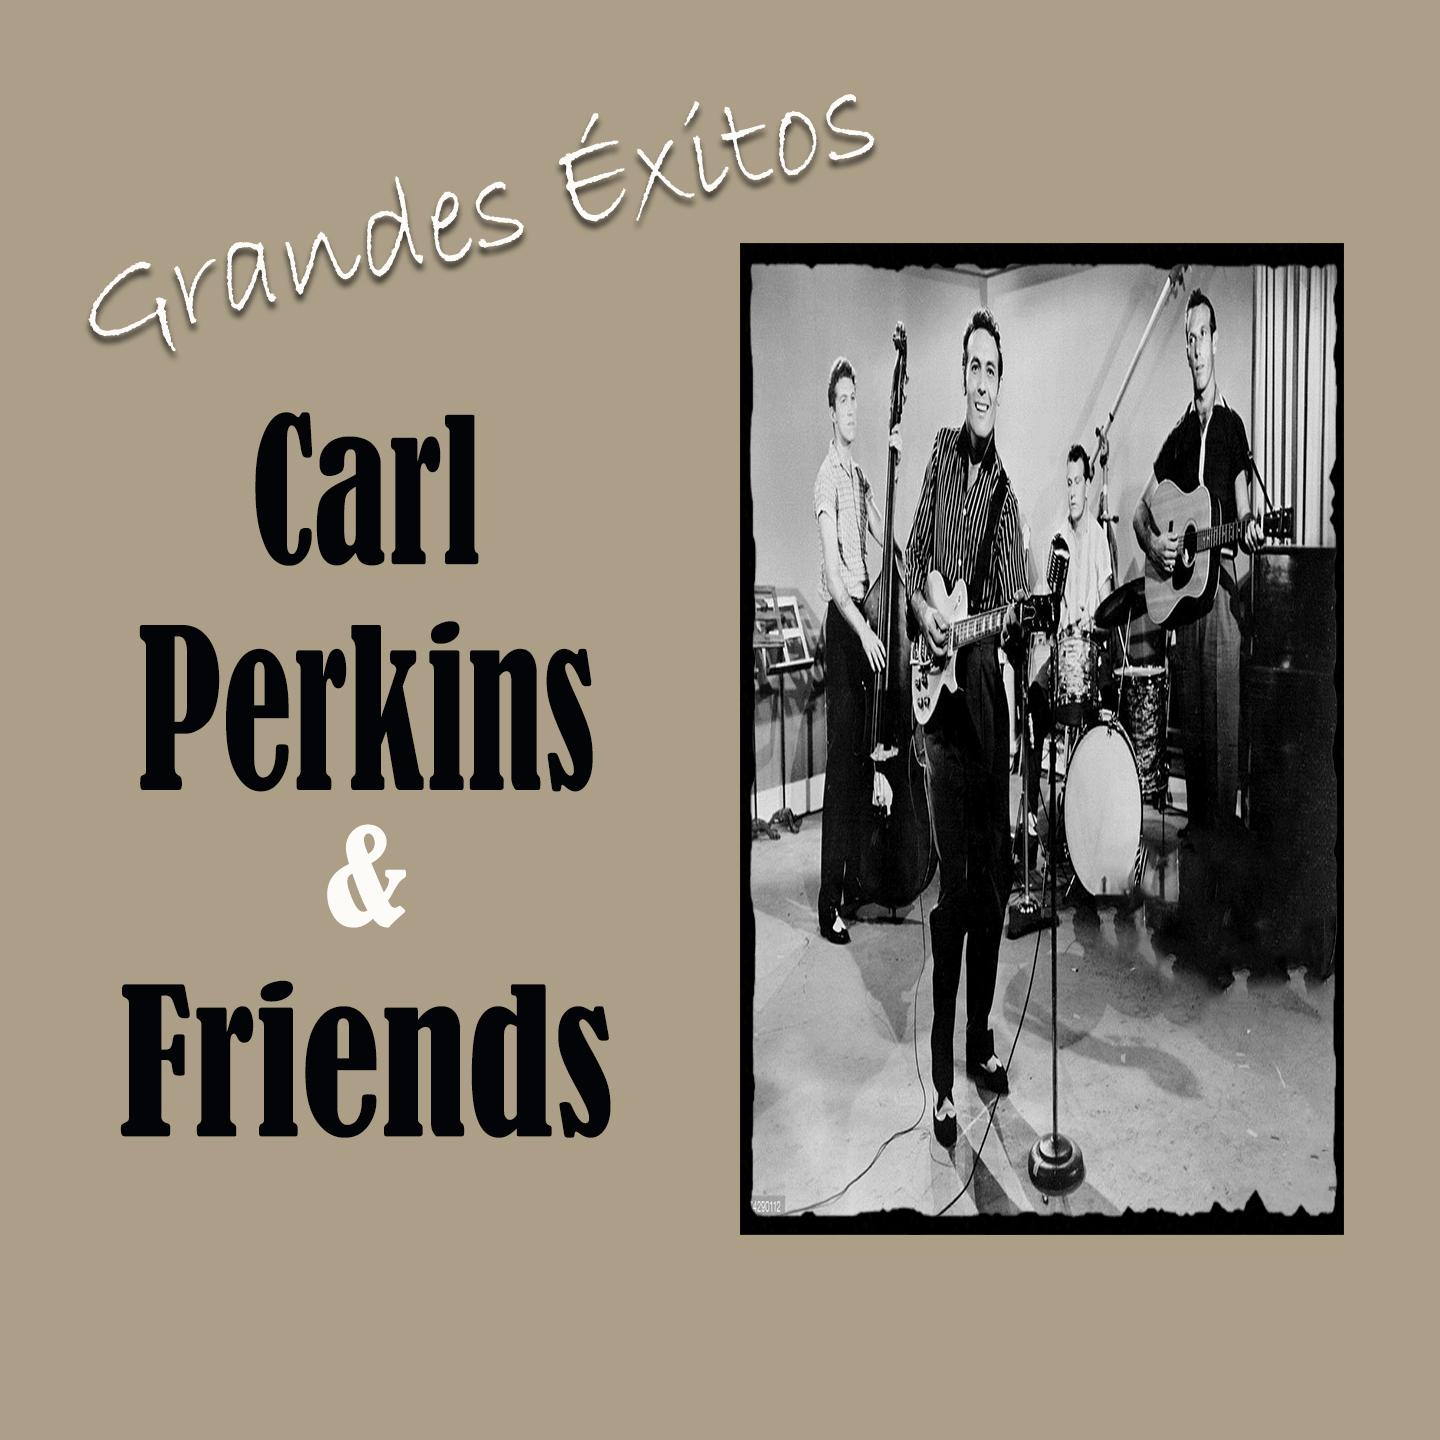 Grandes É xitos, Carl Perkins  Friends